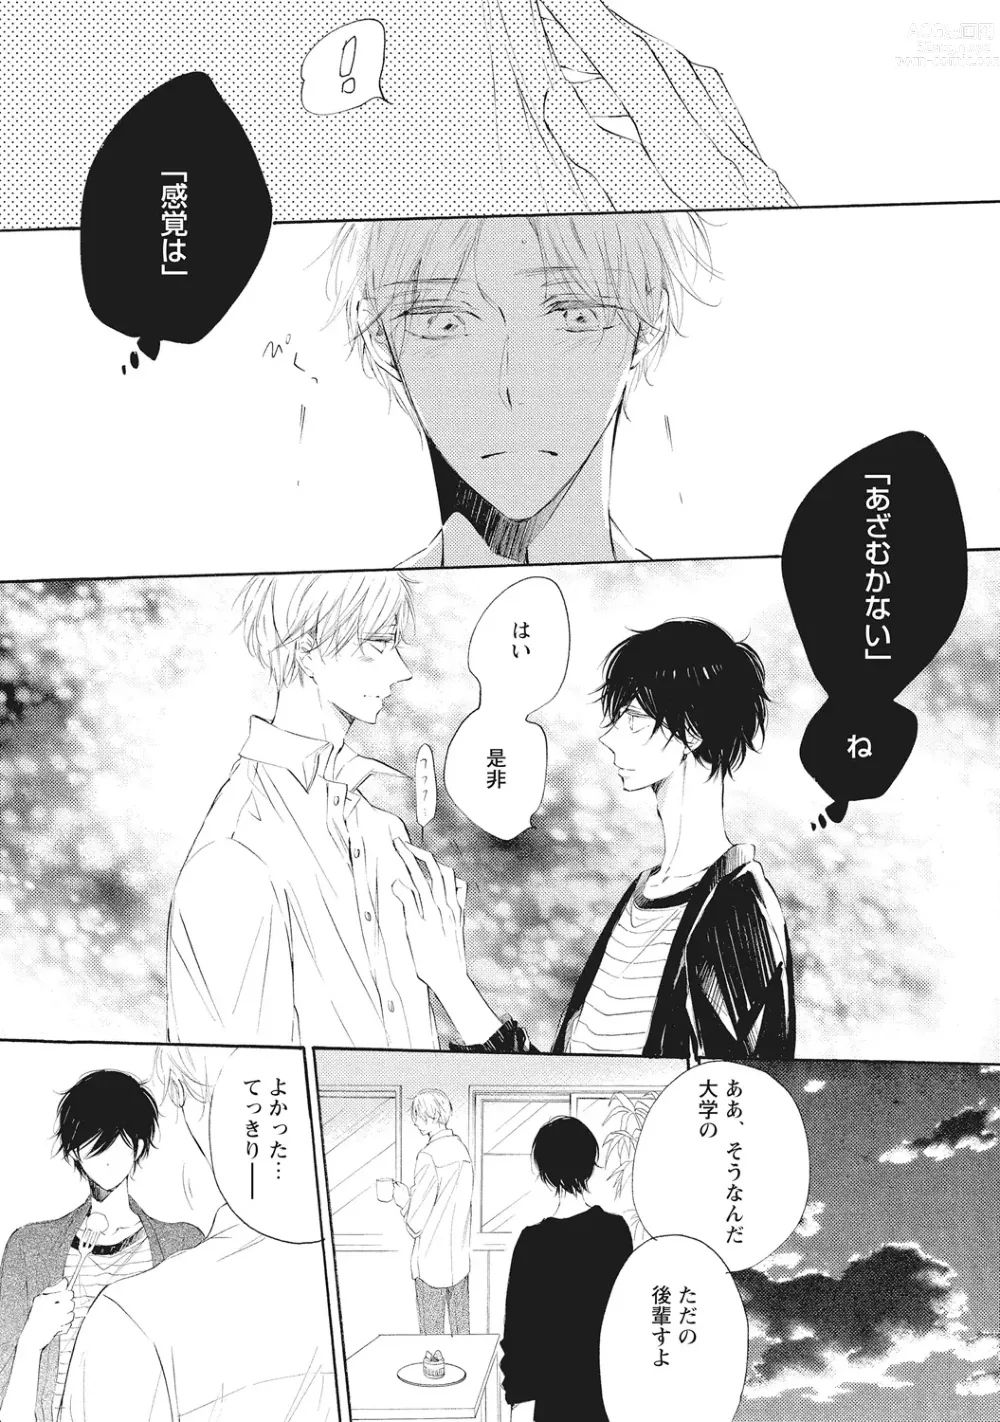 Page 181 of manga Kateinai Seiai